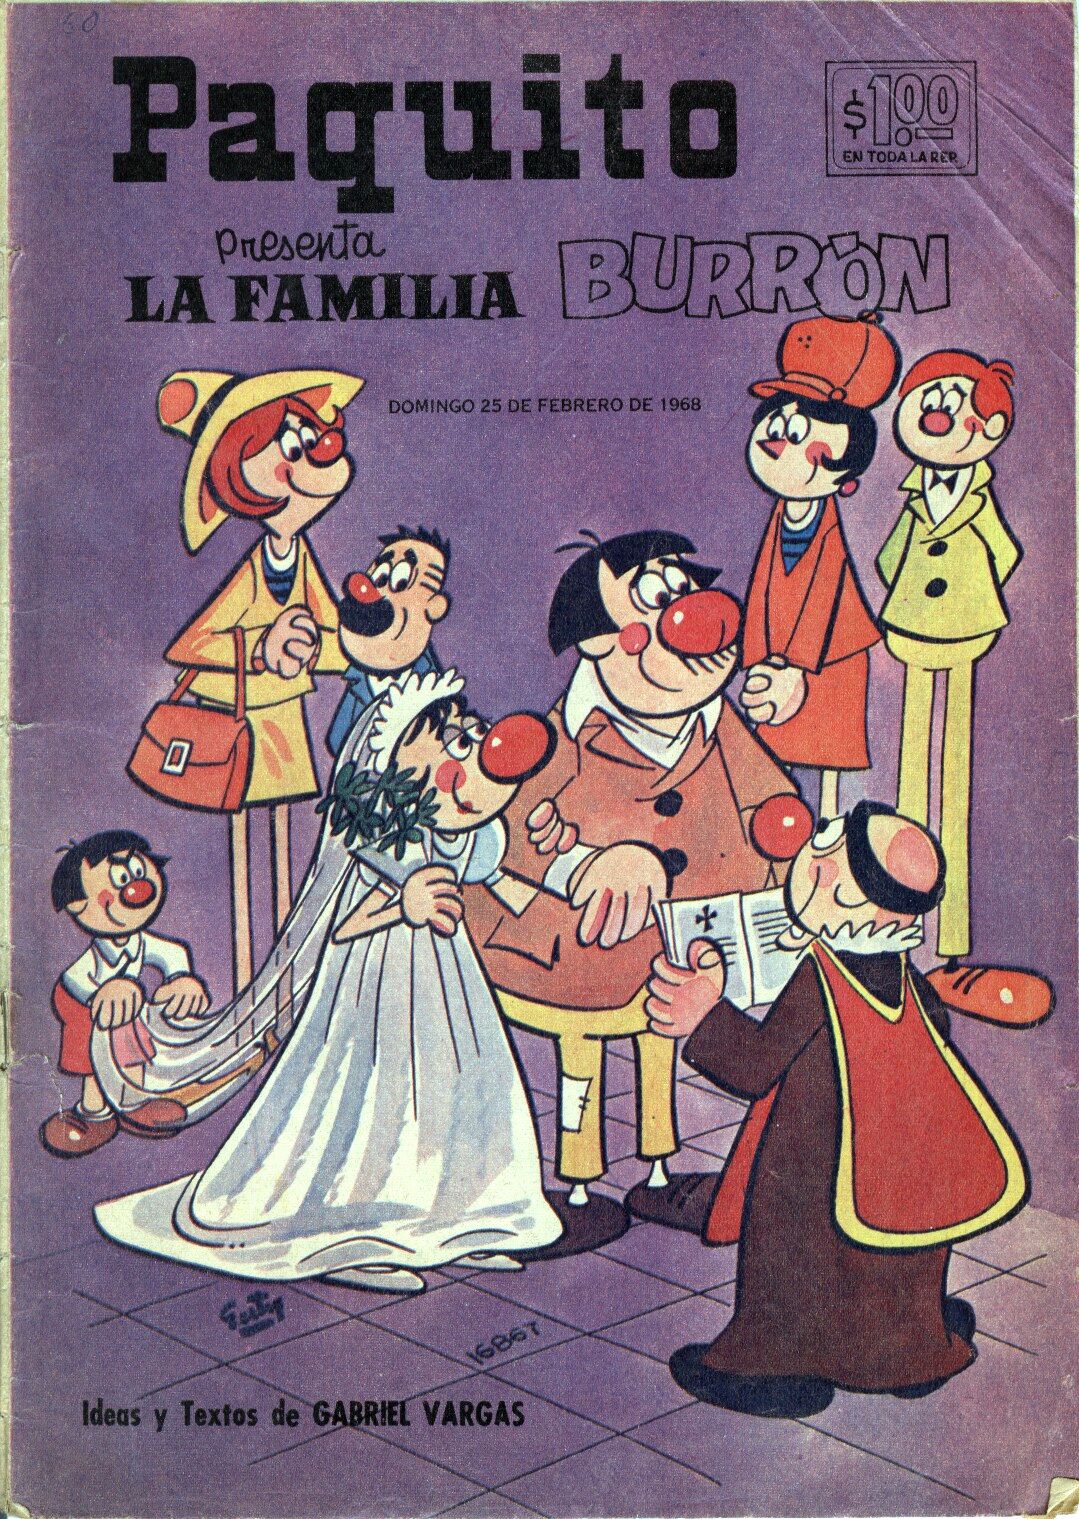 Mexico Comic Sonrisas Paquito La Familia Burrón.